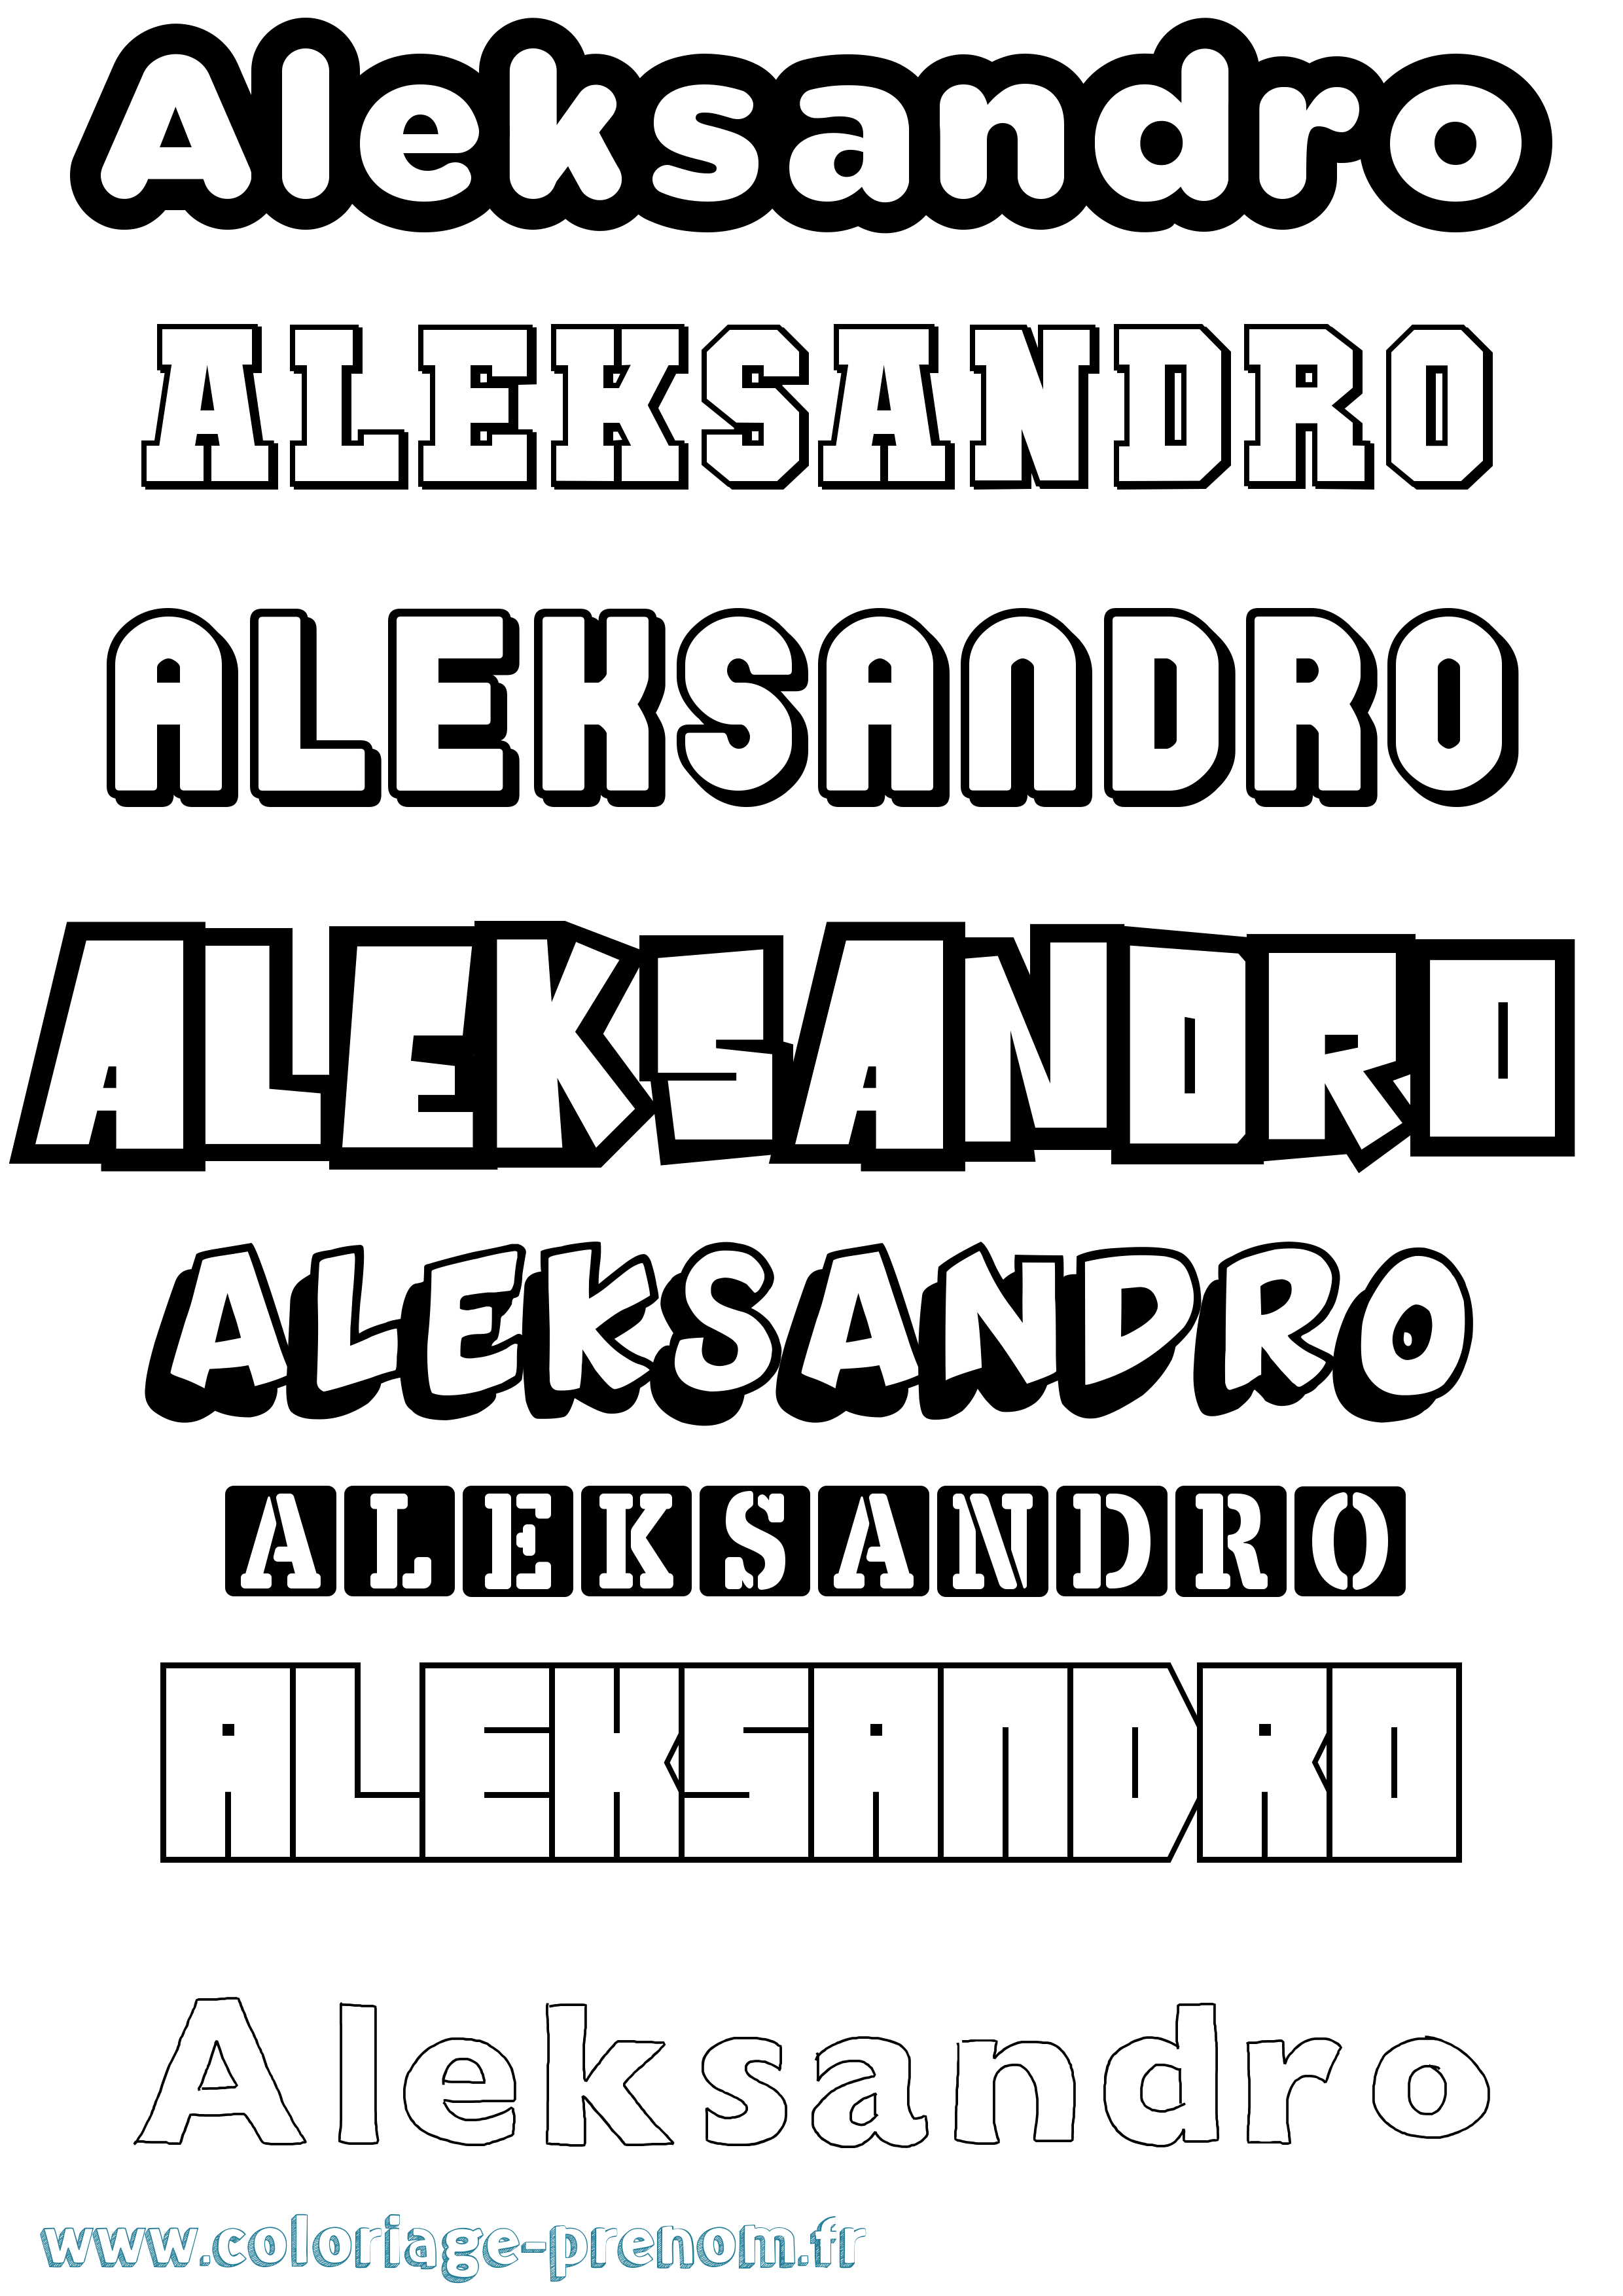 Coloriage prénom Aleksandro Simple